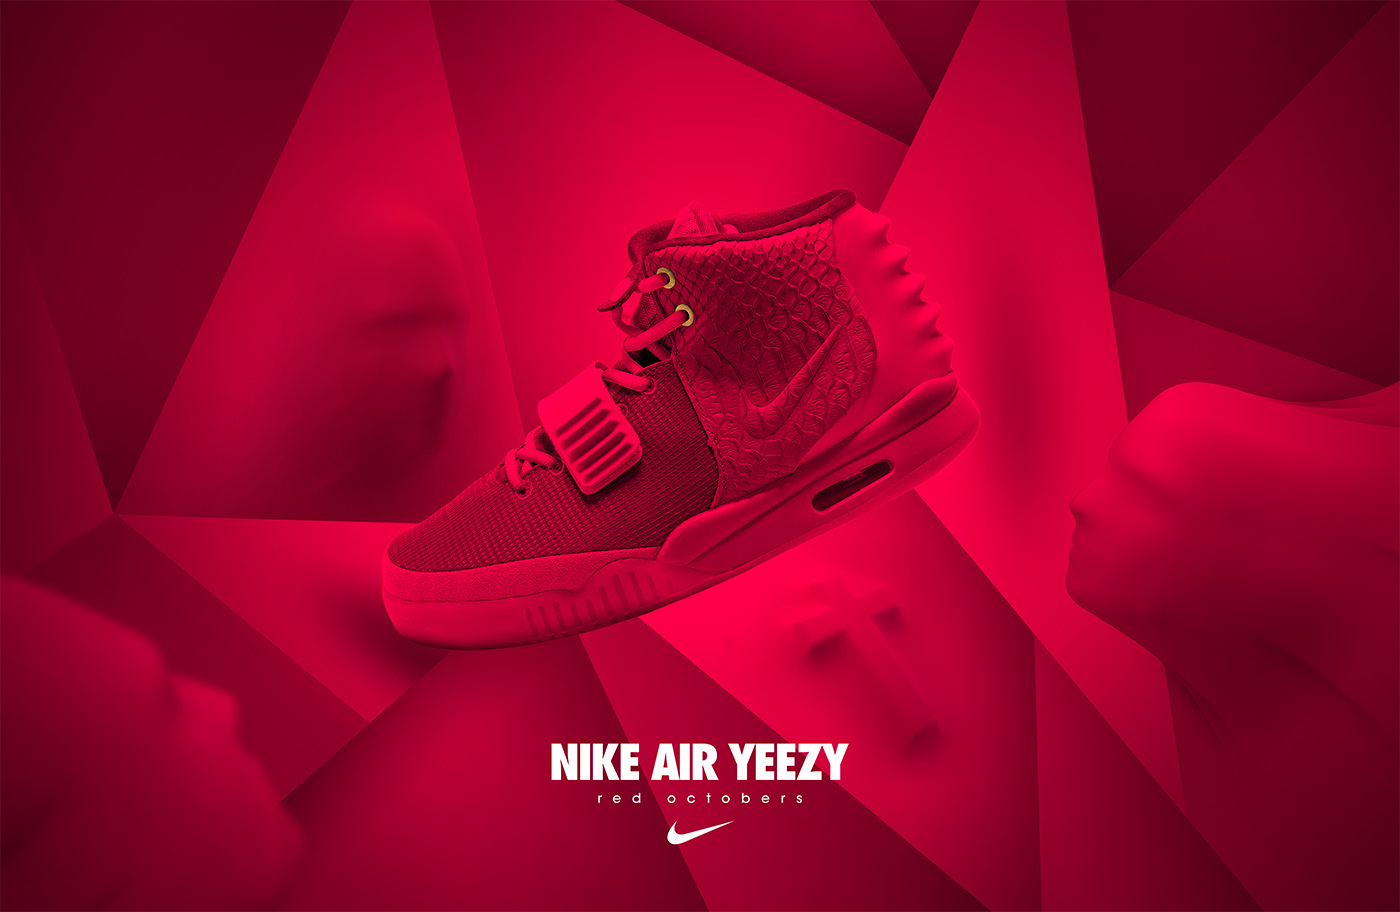 Nike Air Yeezy Ii X Red Octobers On